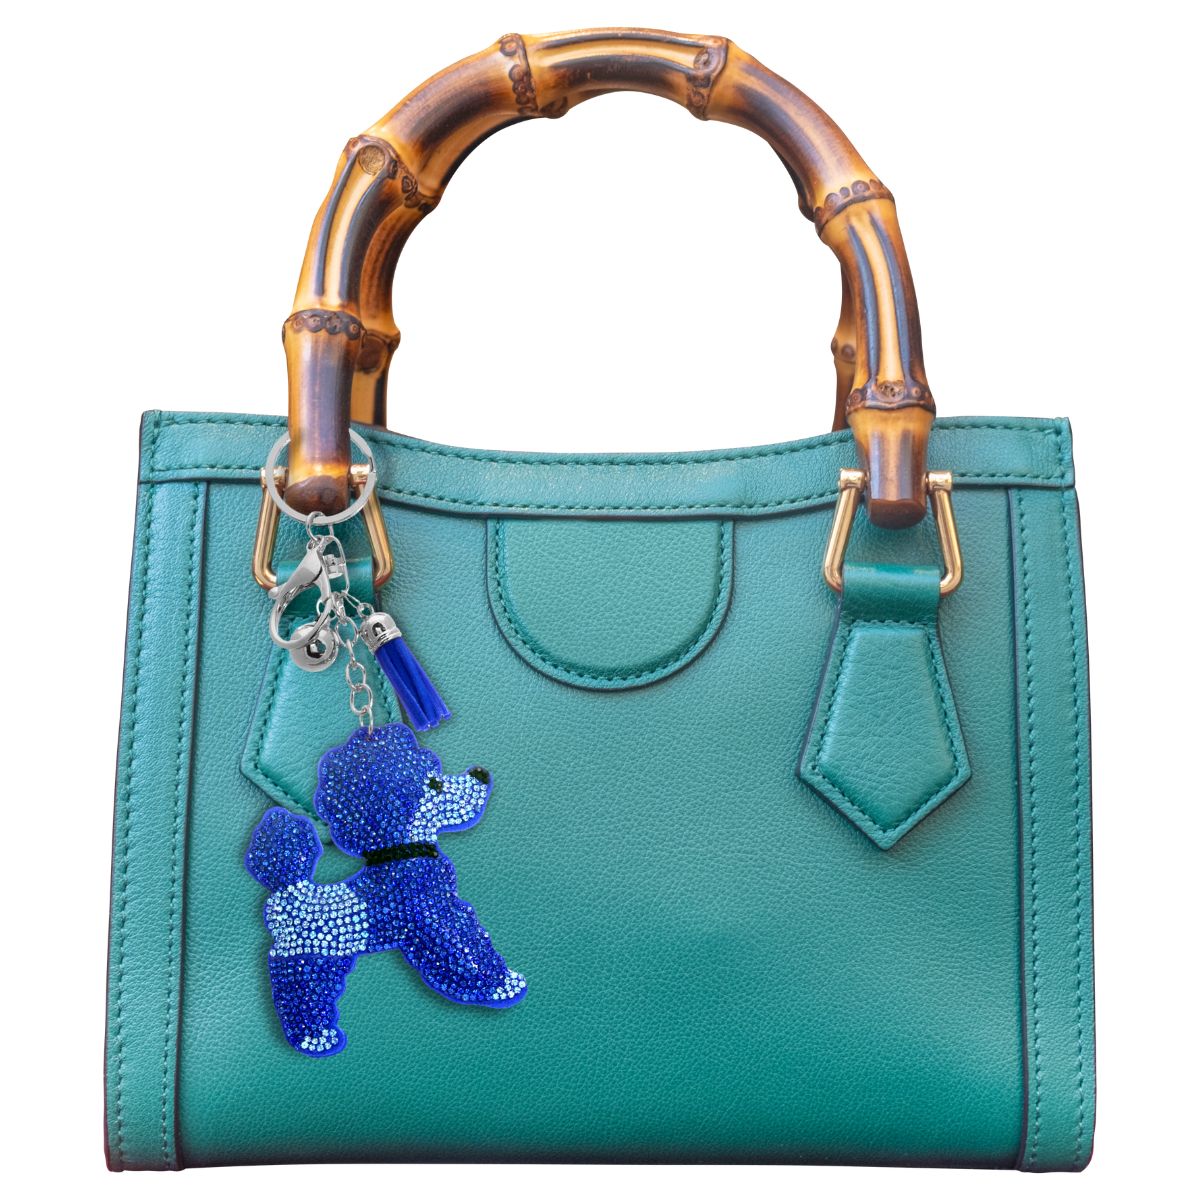 Blue Poodle Keychain Bag Charm